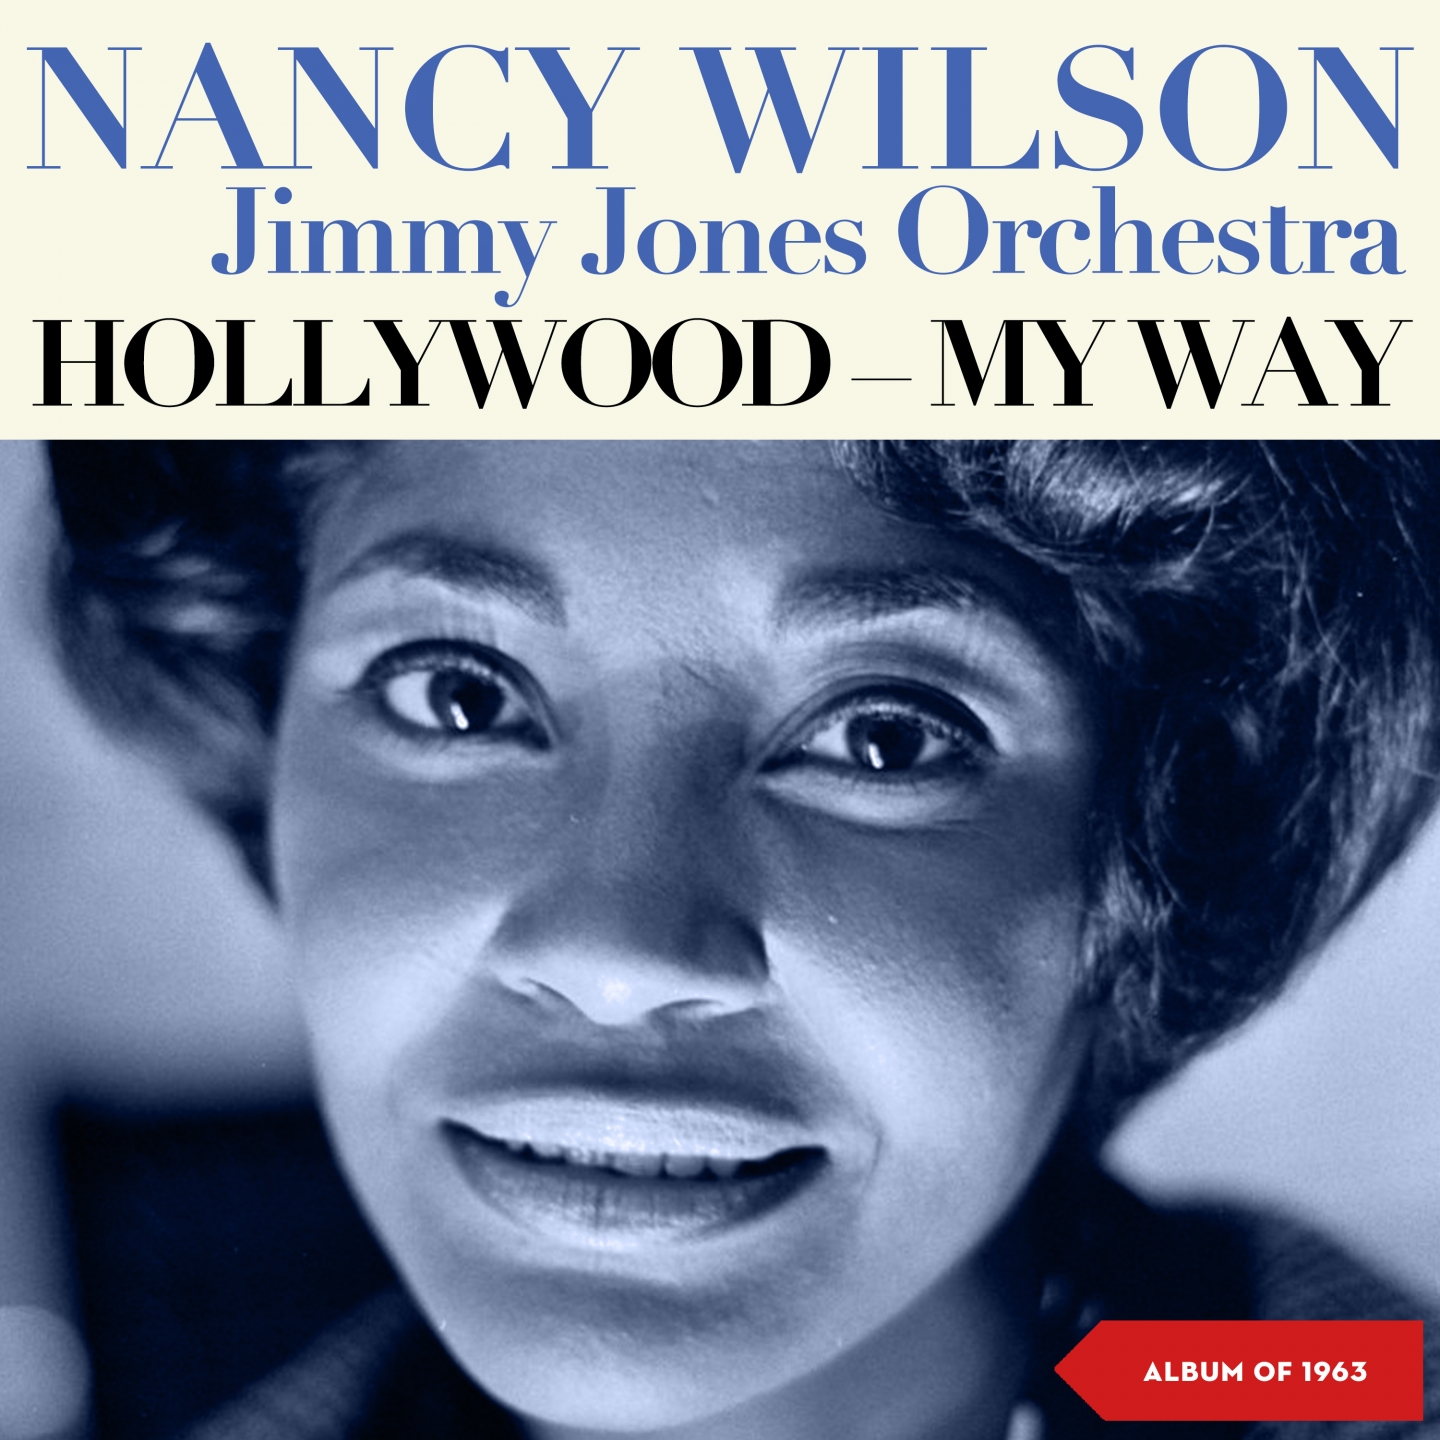 Hollywood - My Way (Album of 1963)